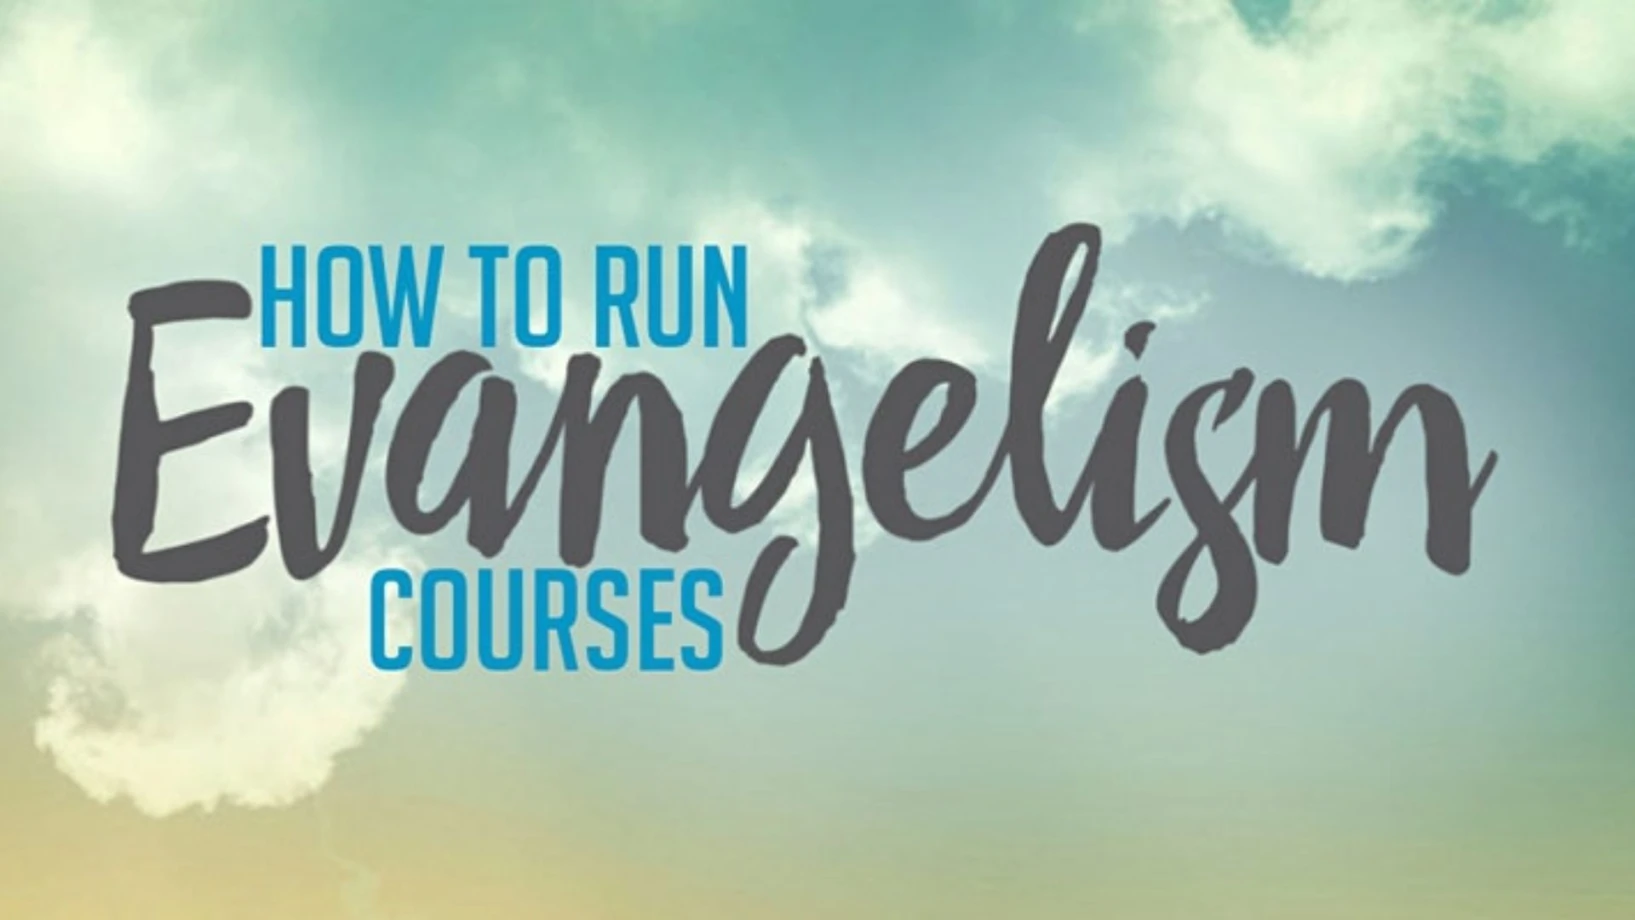 How to run Evangelism courses